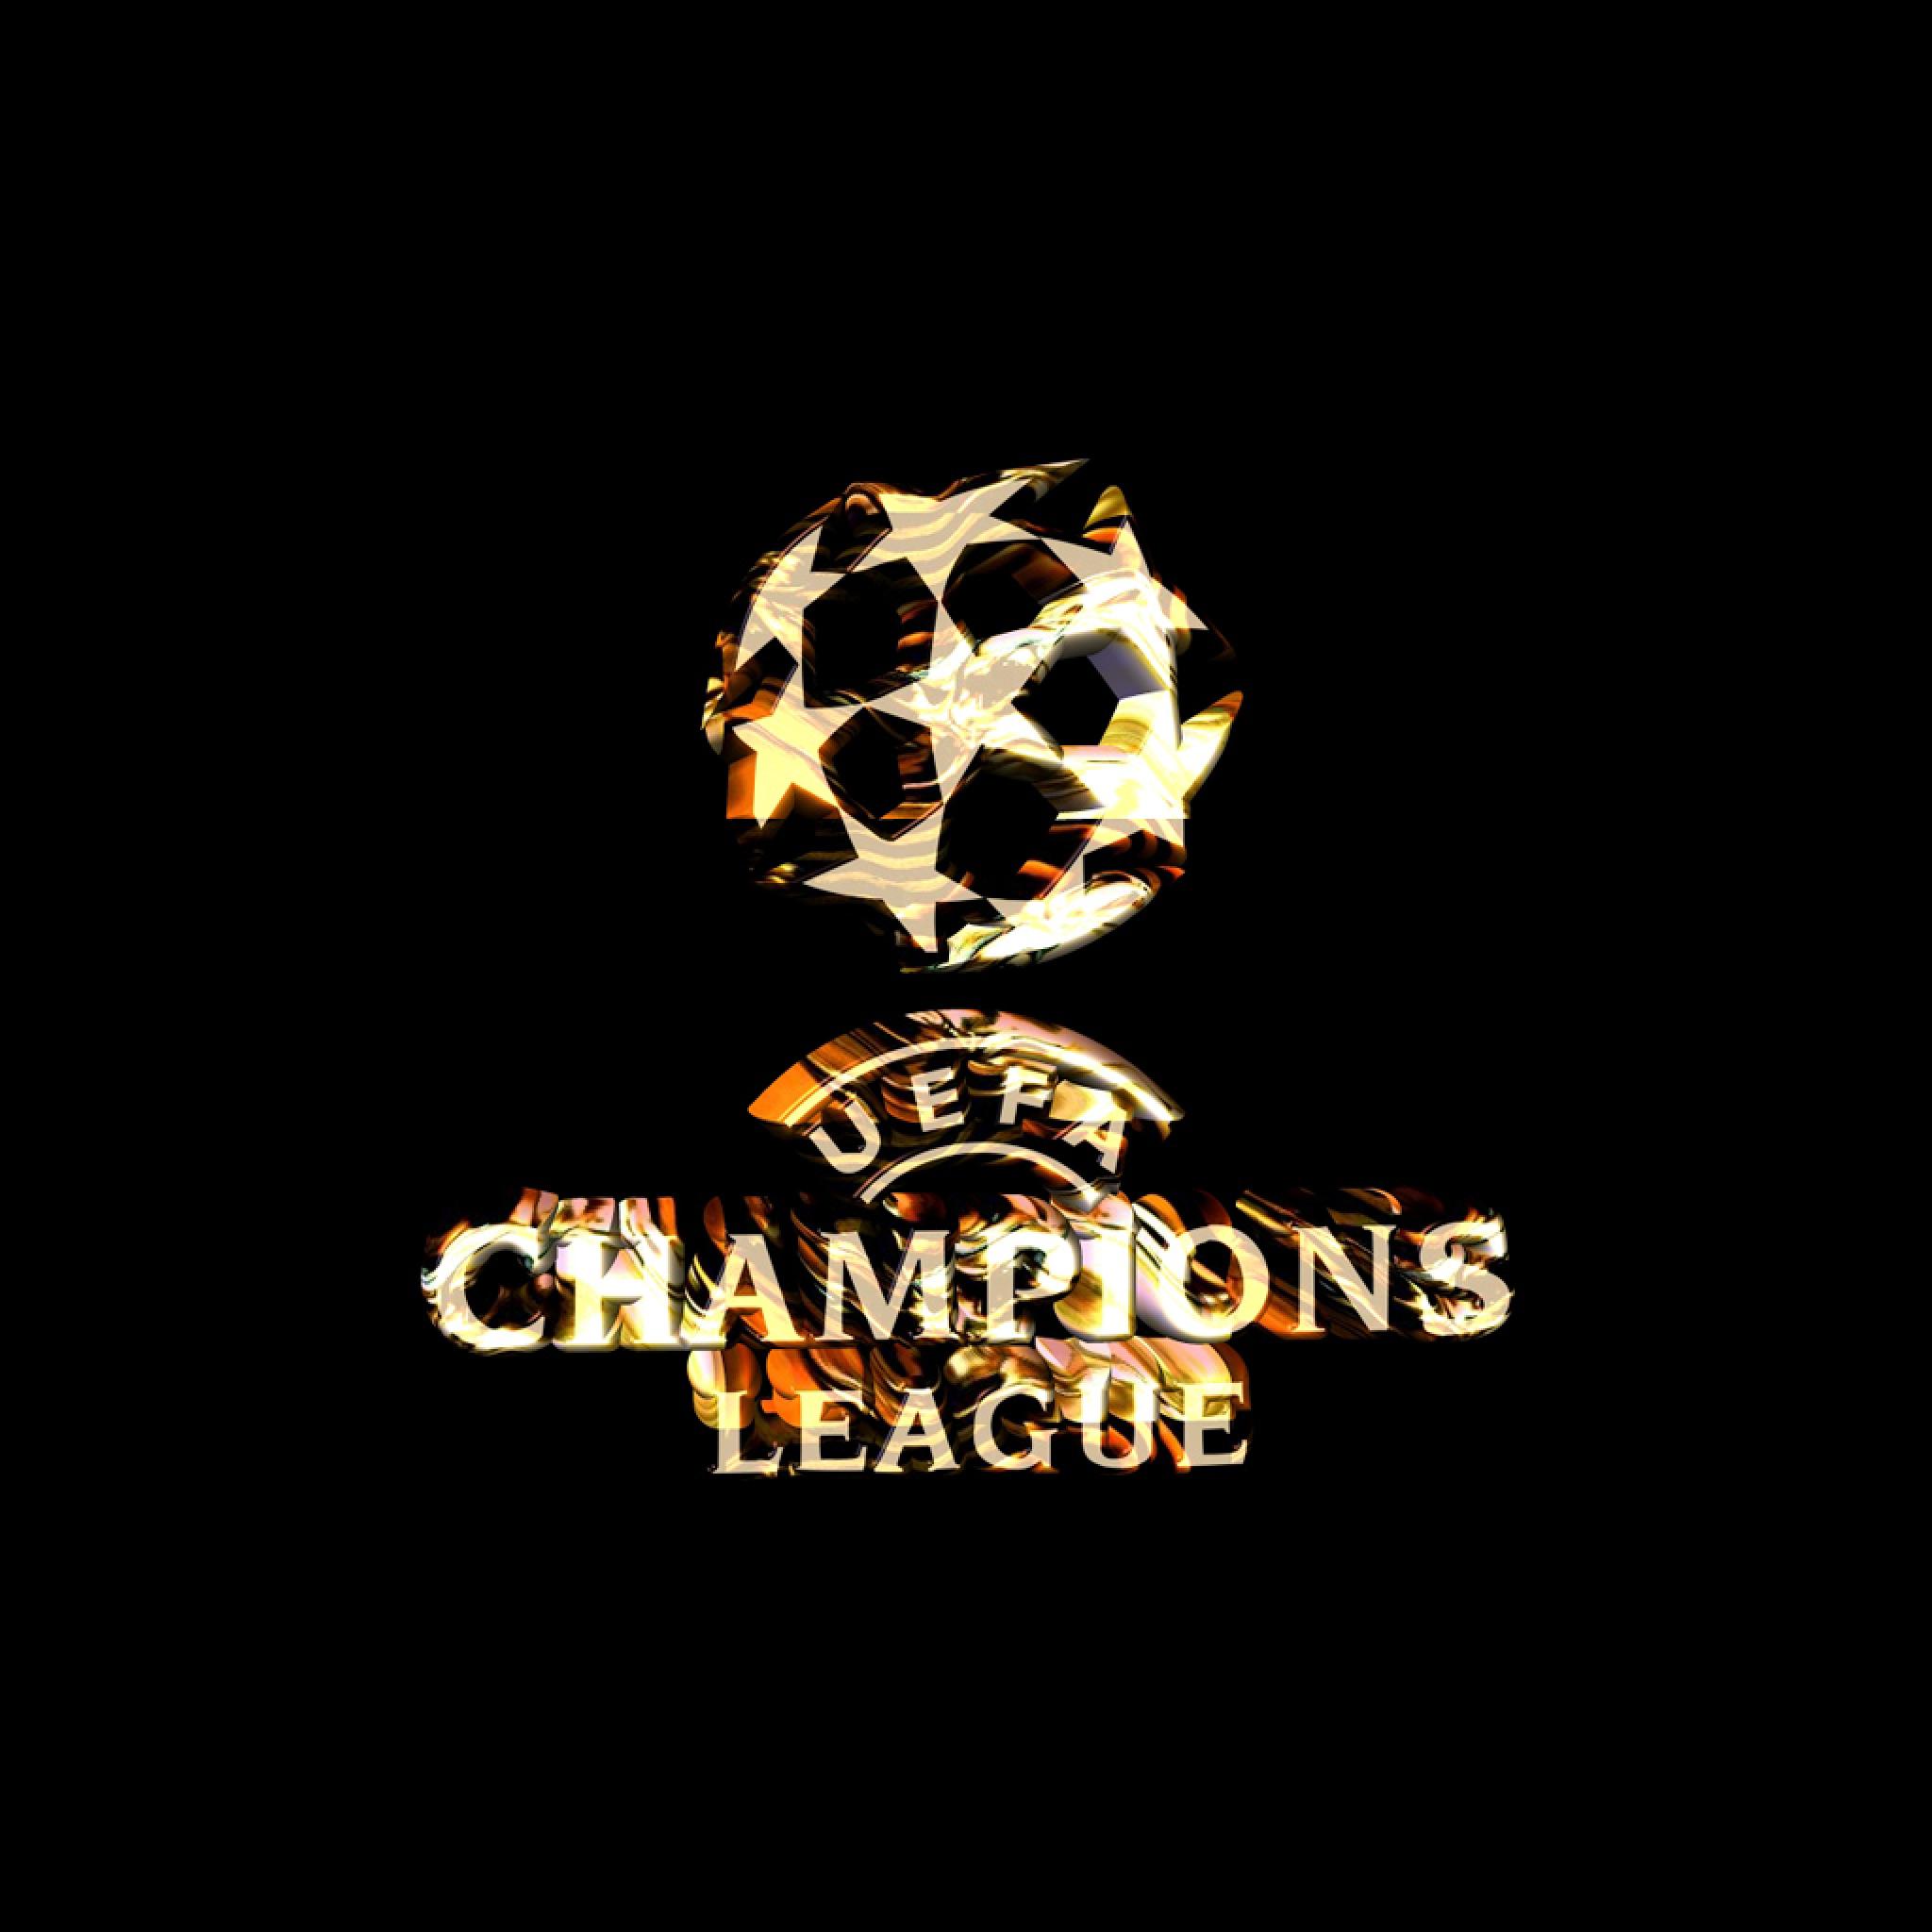 Miscellaneous Champions League Logo iPhone HD Wallpaper Free